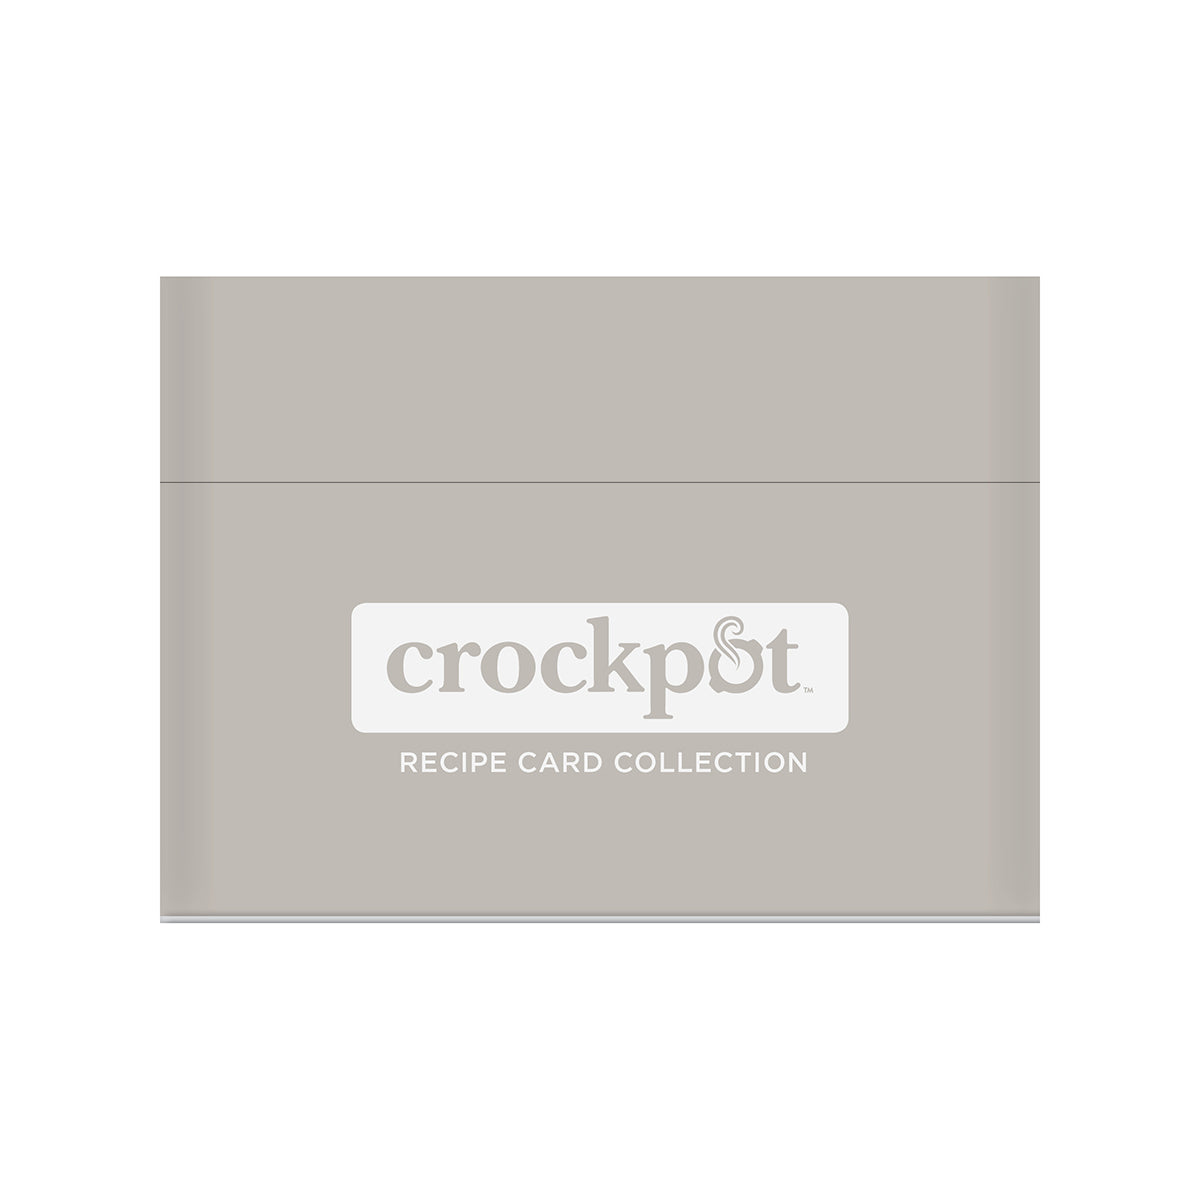 Crockpot Recipe Card Collection Tin